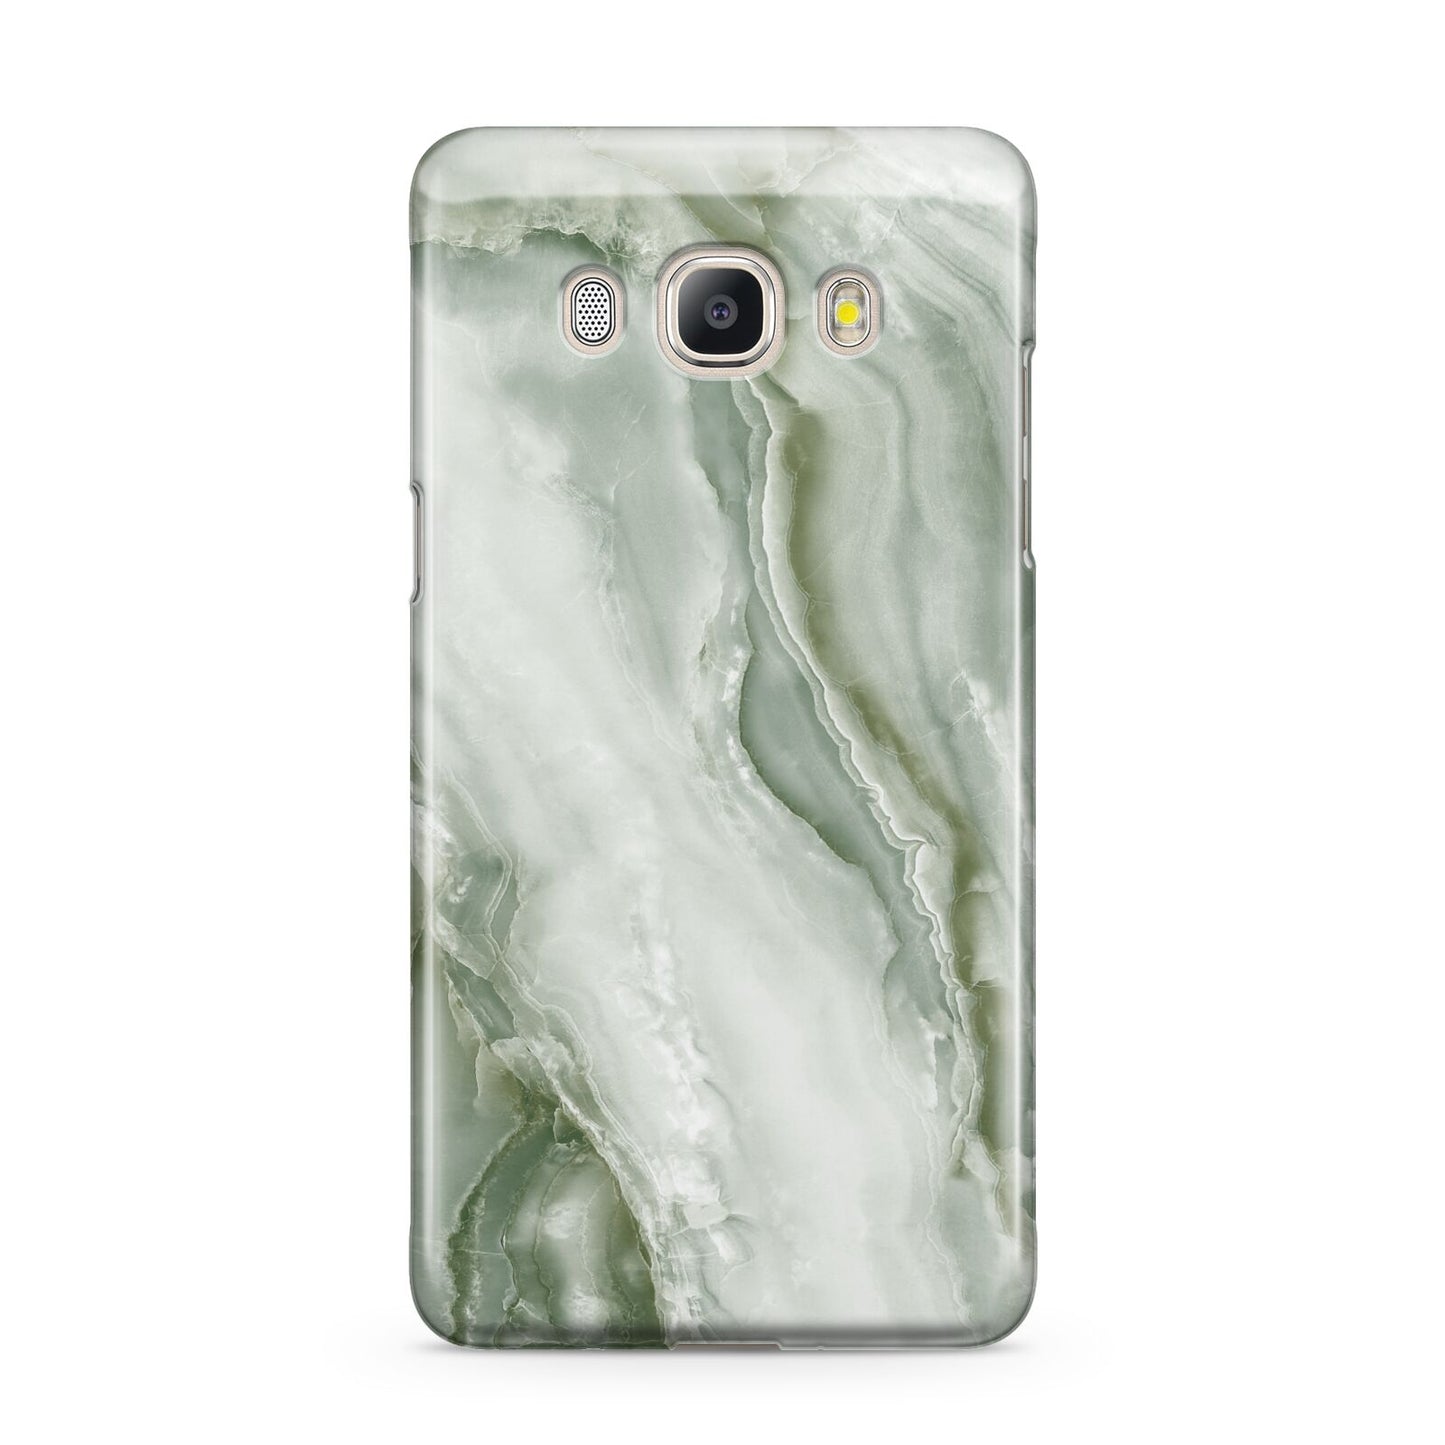 Pistachio Green Marble Samsung Galaxy J5 2016 Case